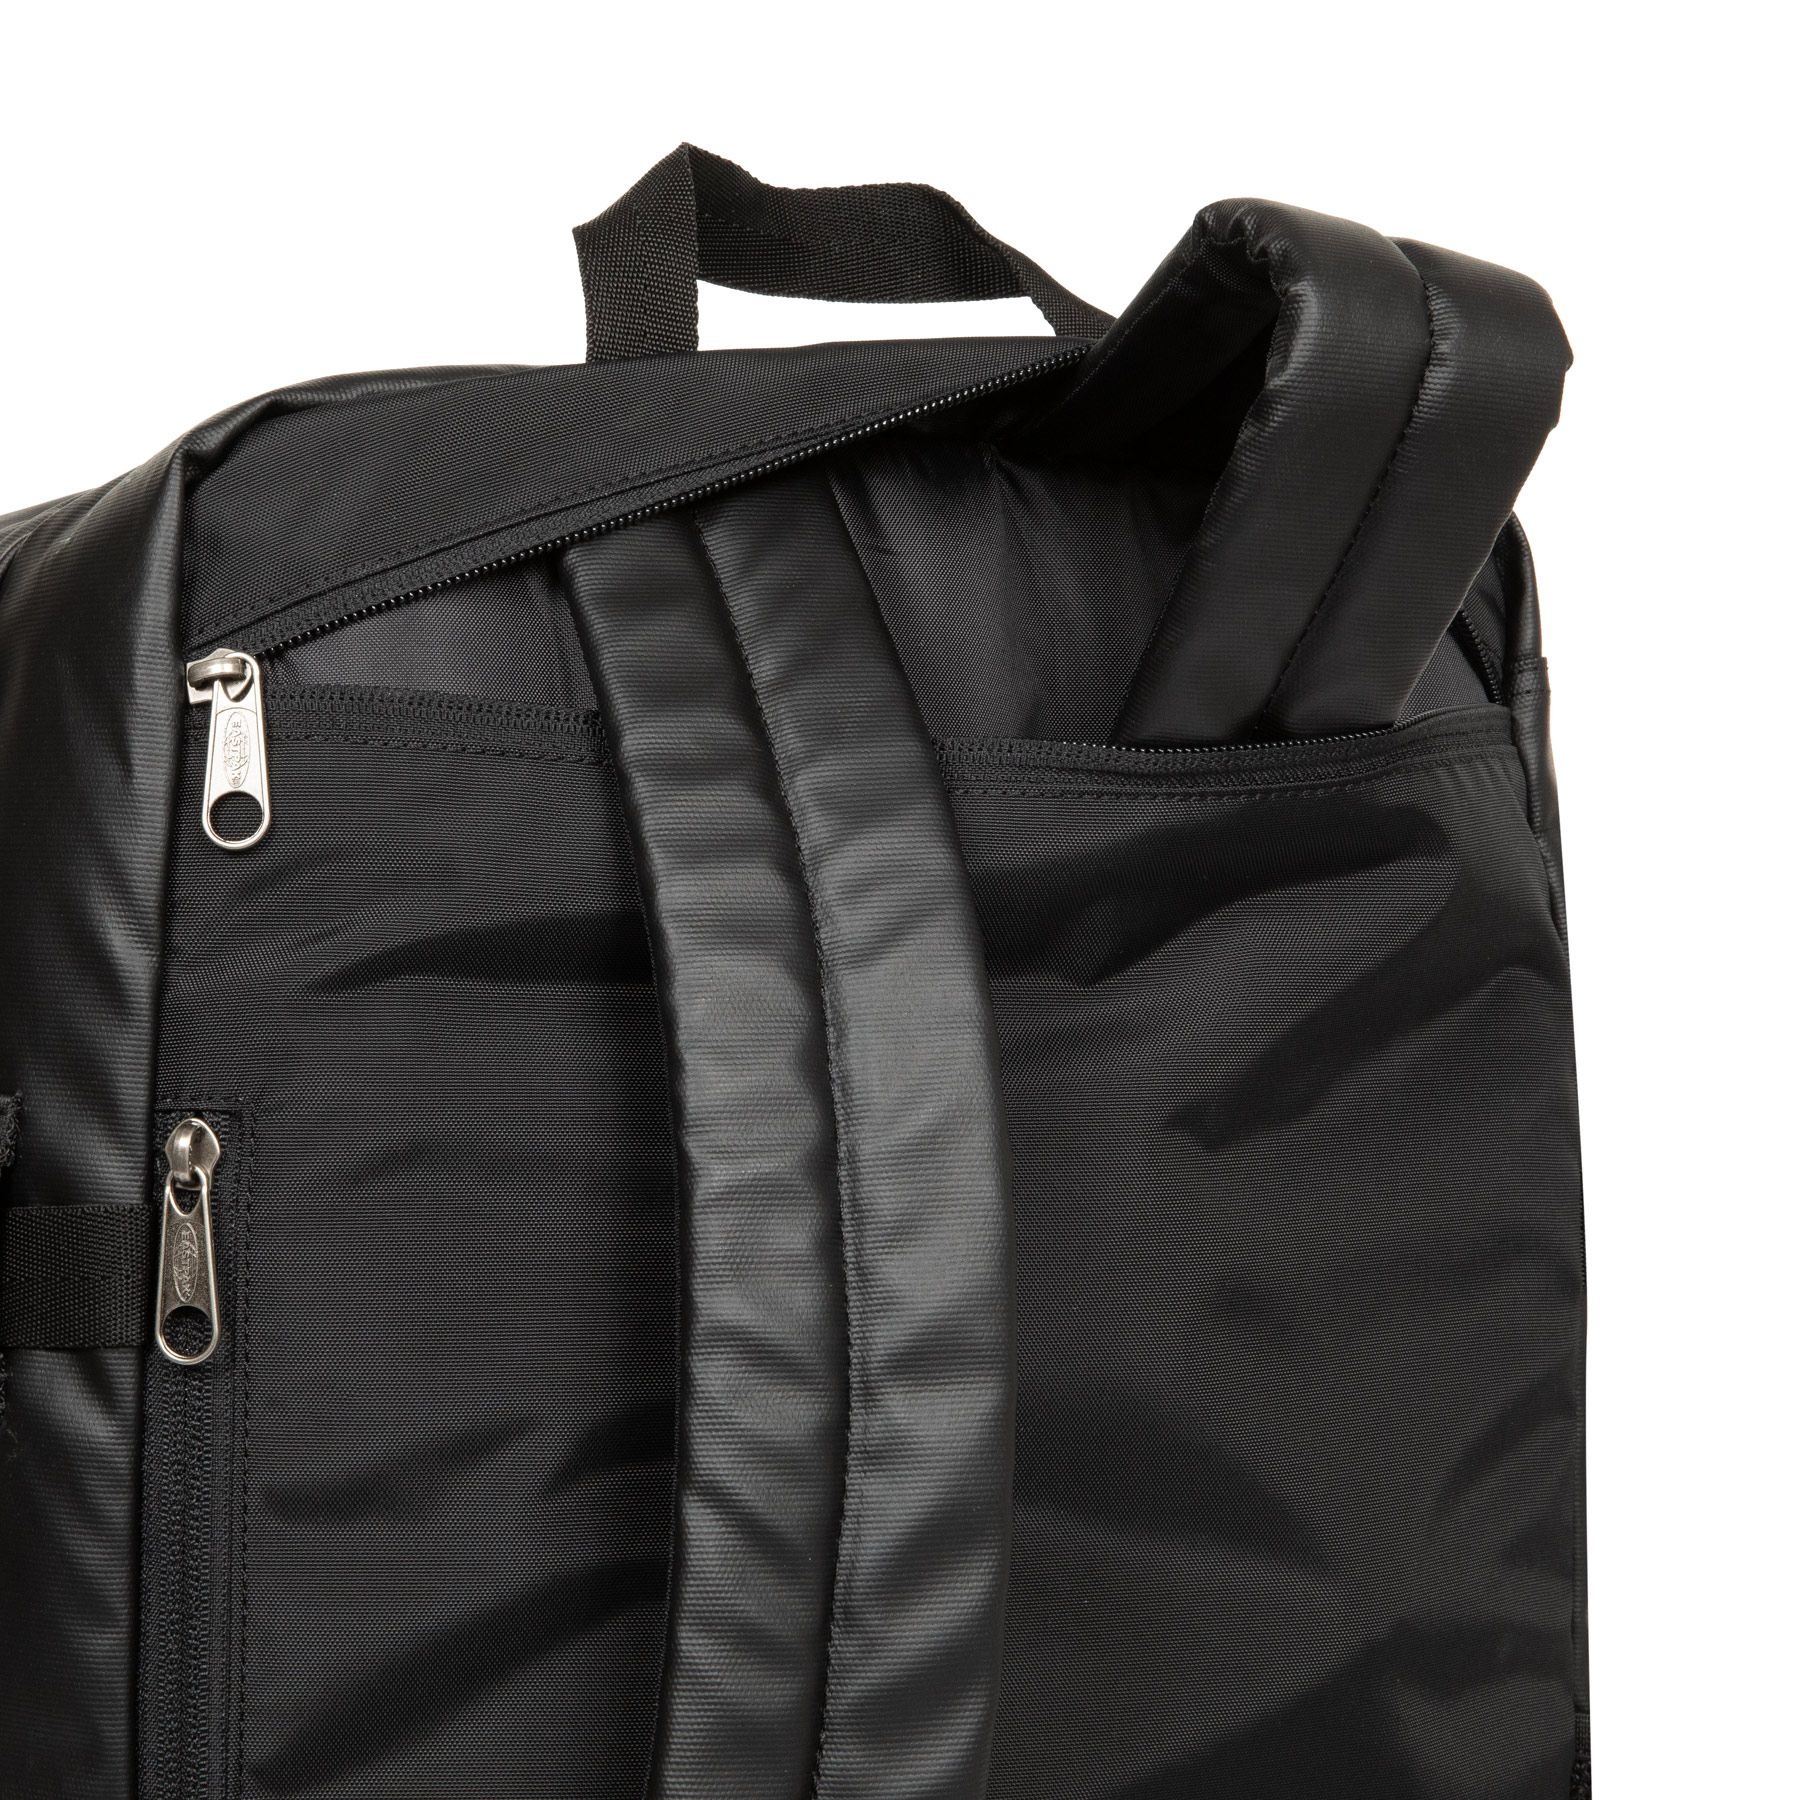 Eastpak Eastpak Travelpack - handbagage rugzak - Tarp Black